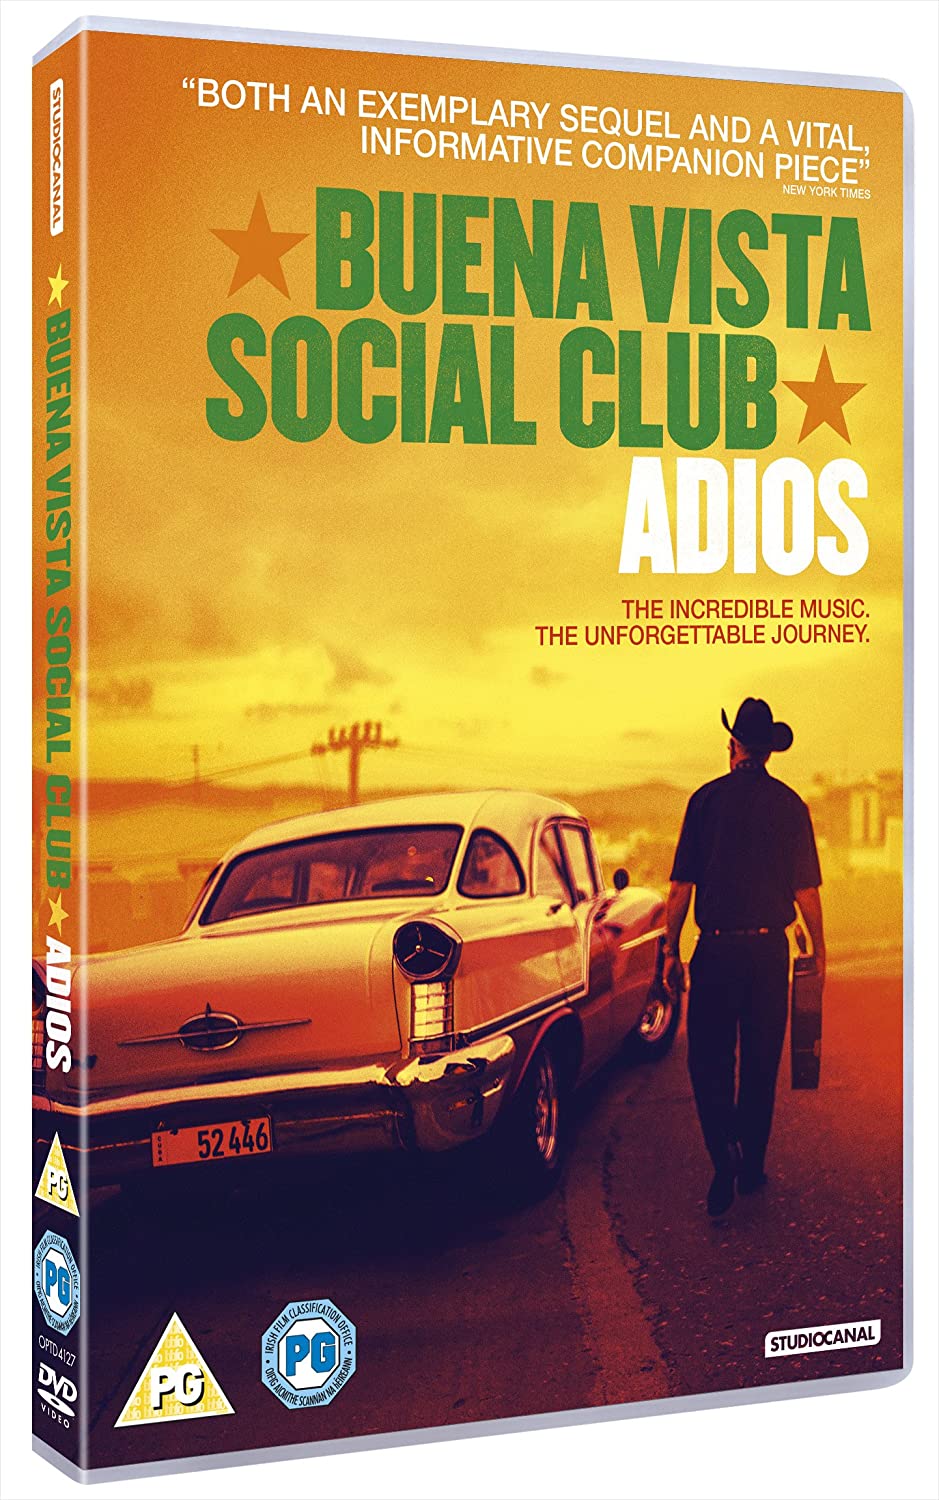 Buena Vista Social Club: Adios - Documentary [DVD]